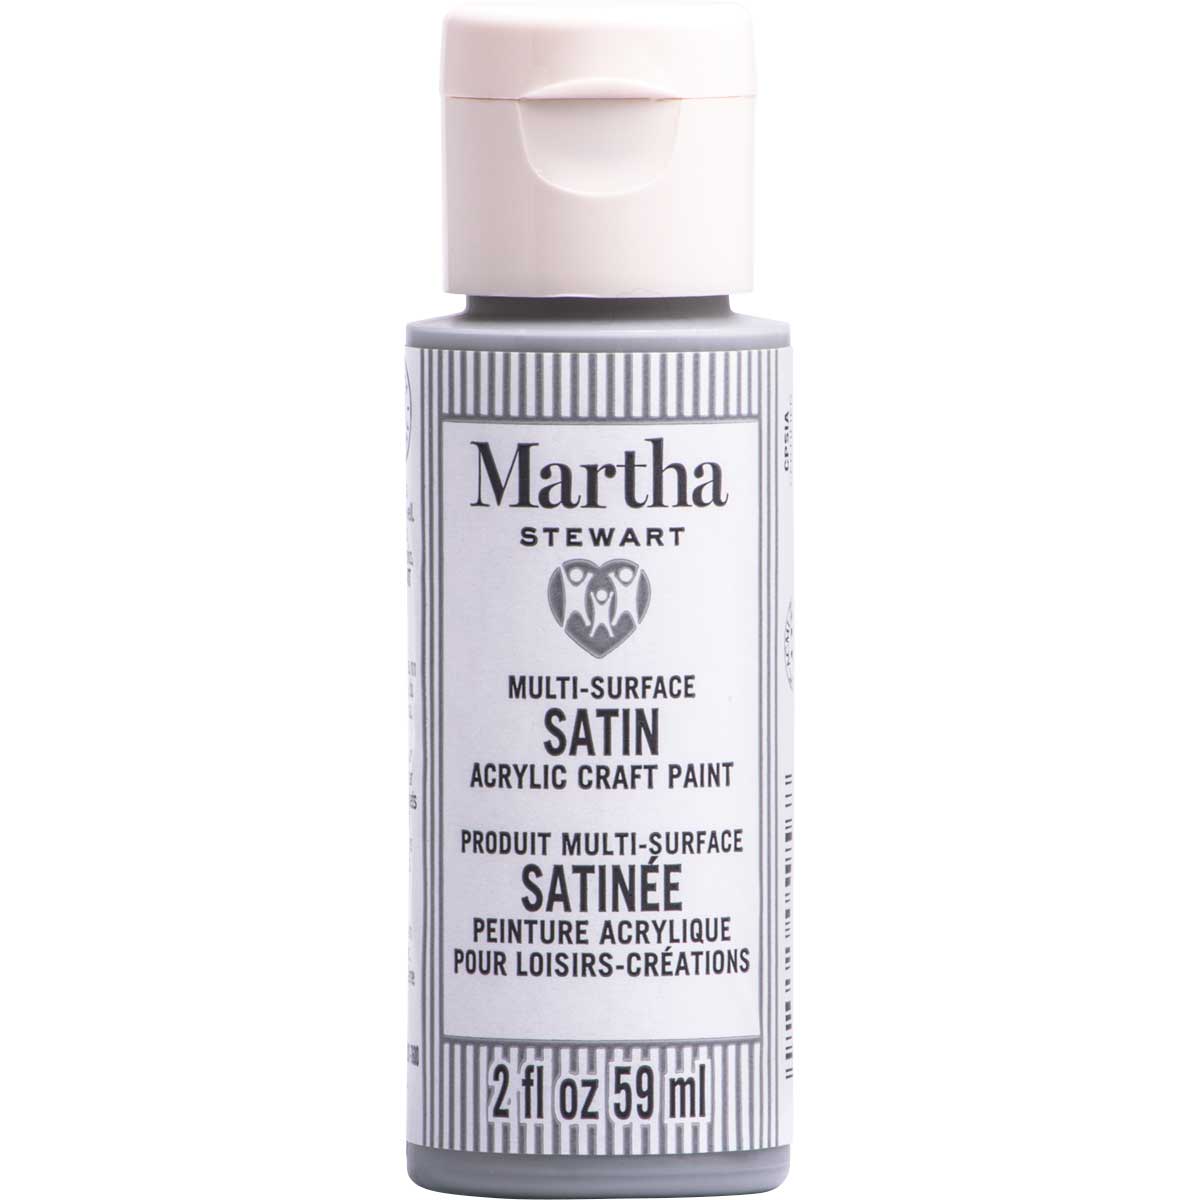 Martha Stewart ® Multi-Surface Satin Acrylic Craft Paint CPSIA - Cool Gray, 2 oz. - 5956